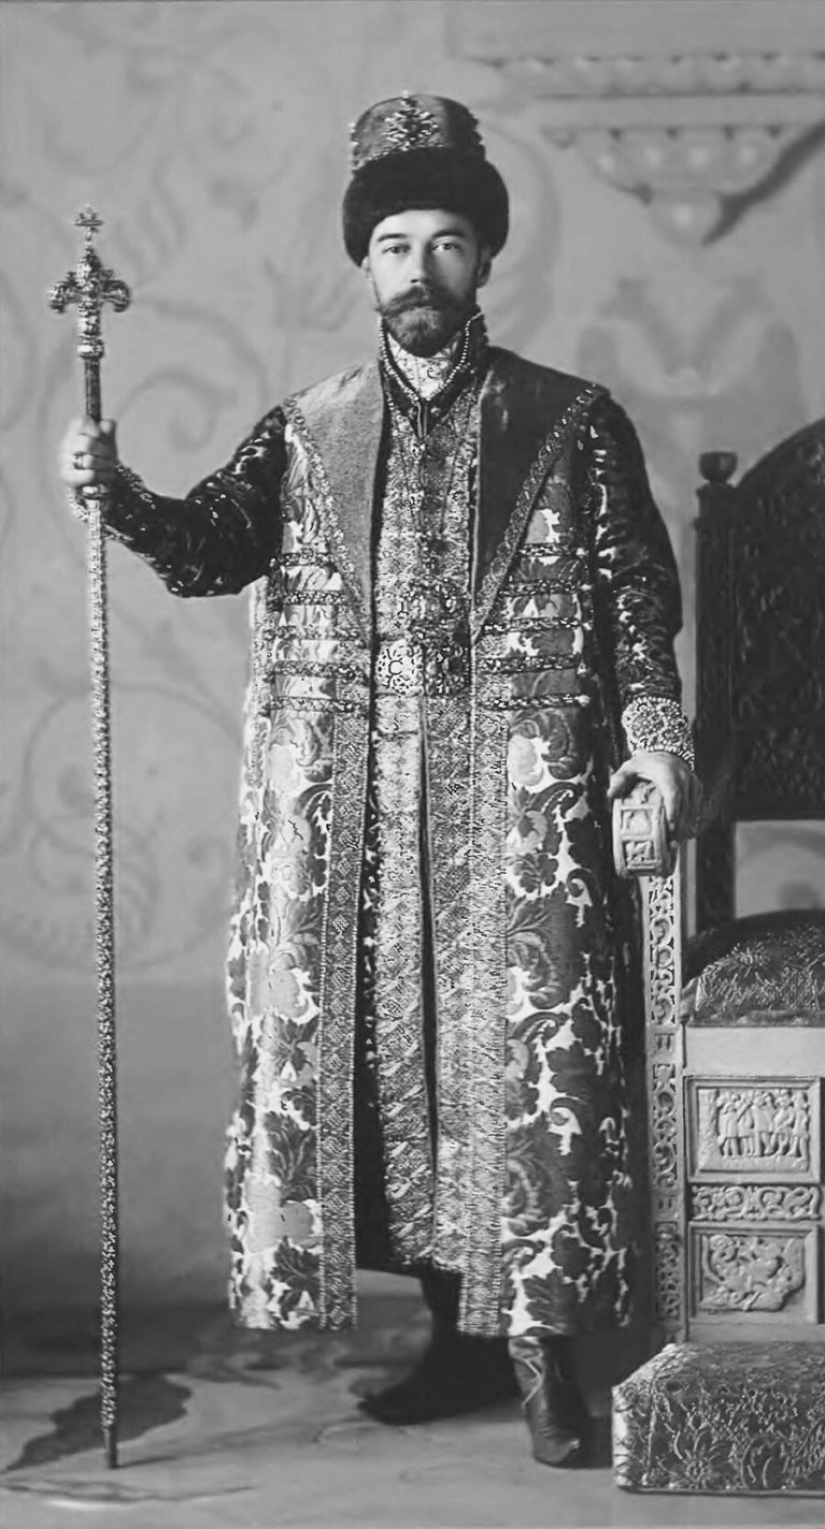 Rare photos of the last Russian Tsar Nicholas II